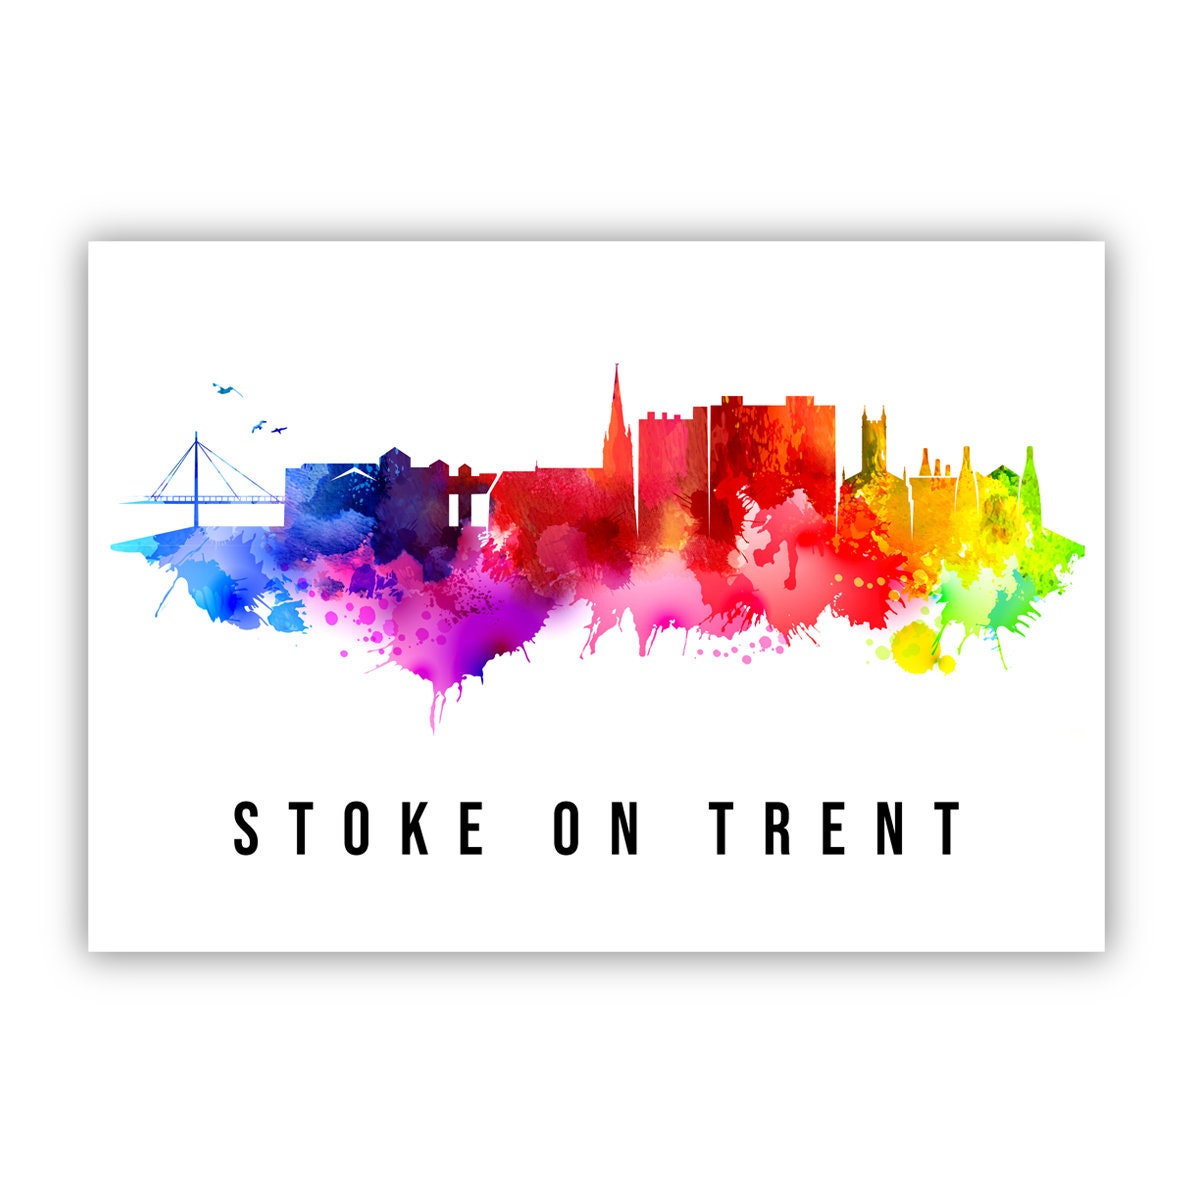 Stoke on Trent England Poster, Skyline poster cityscape poster, Landmark City Illustration poster, Home wall decoration, Office wall art